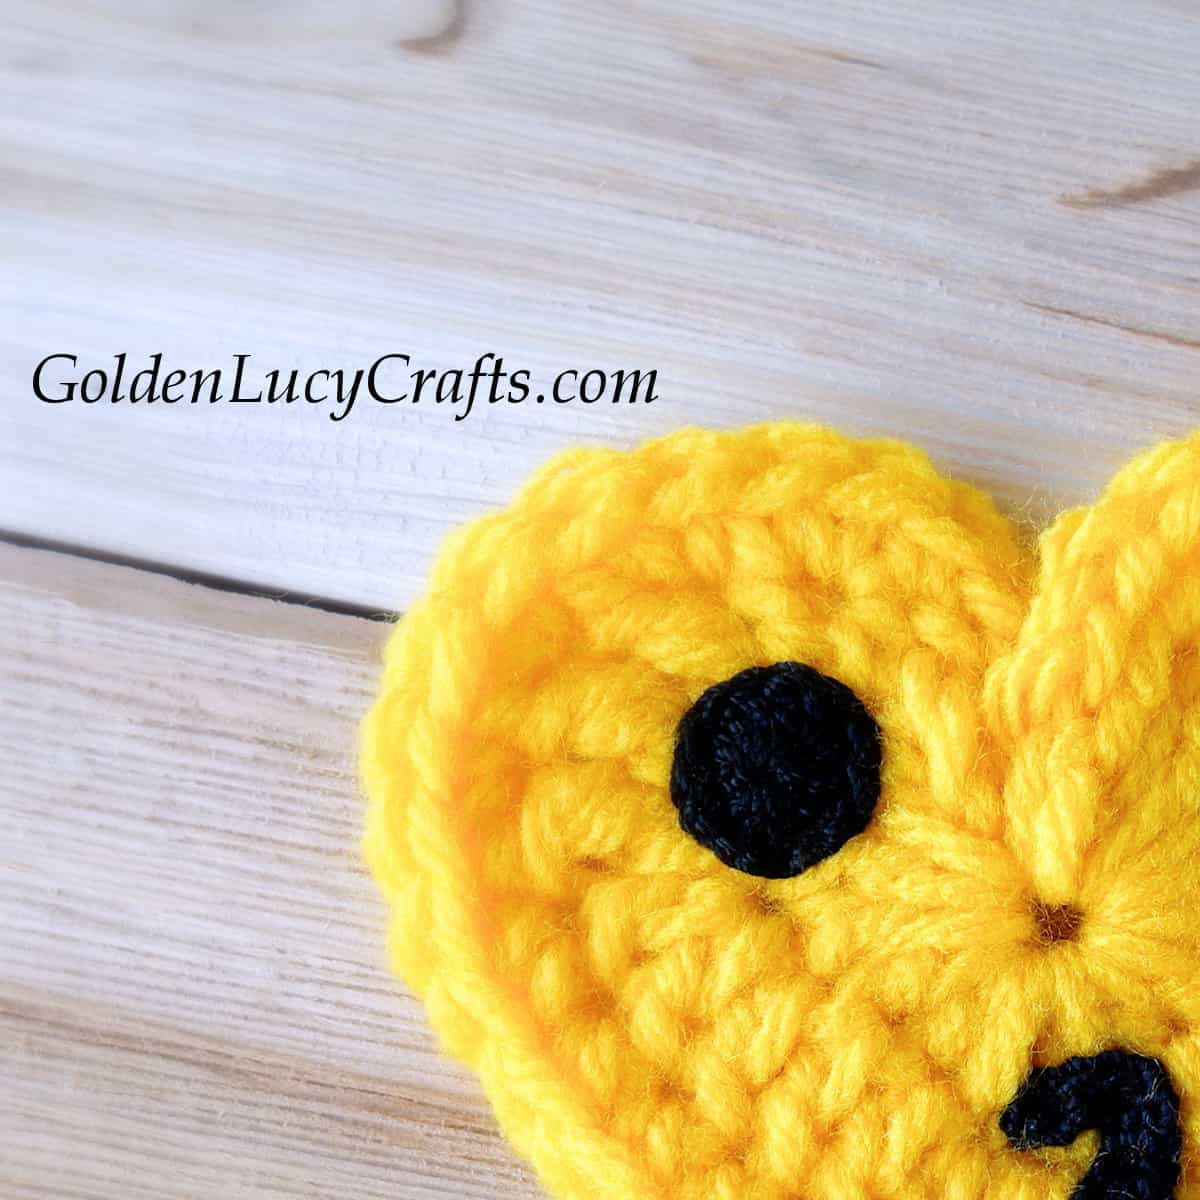 Crochet emoji, the eye close up picture.